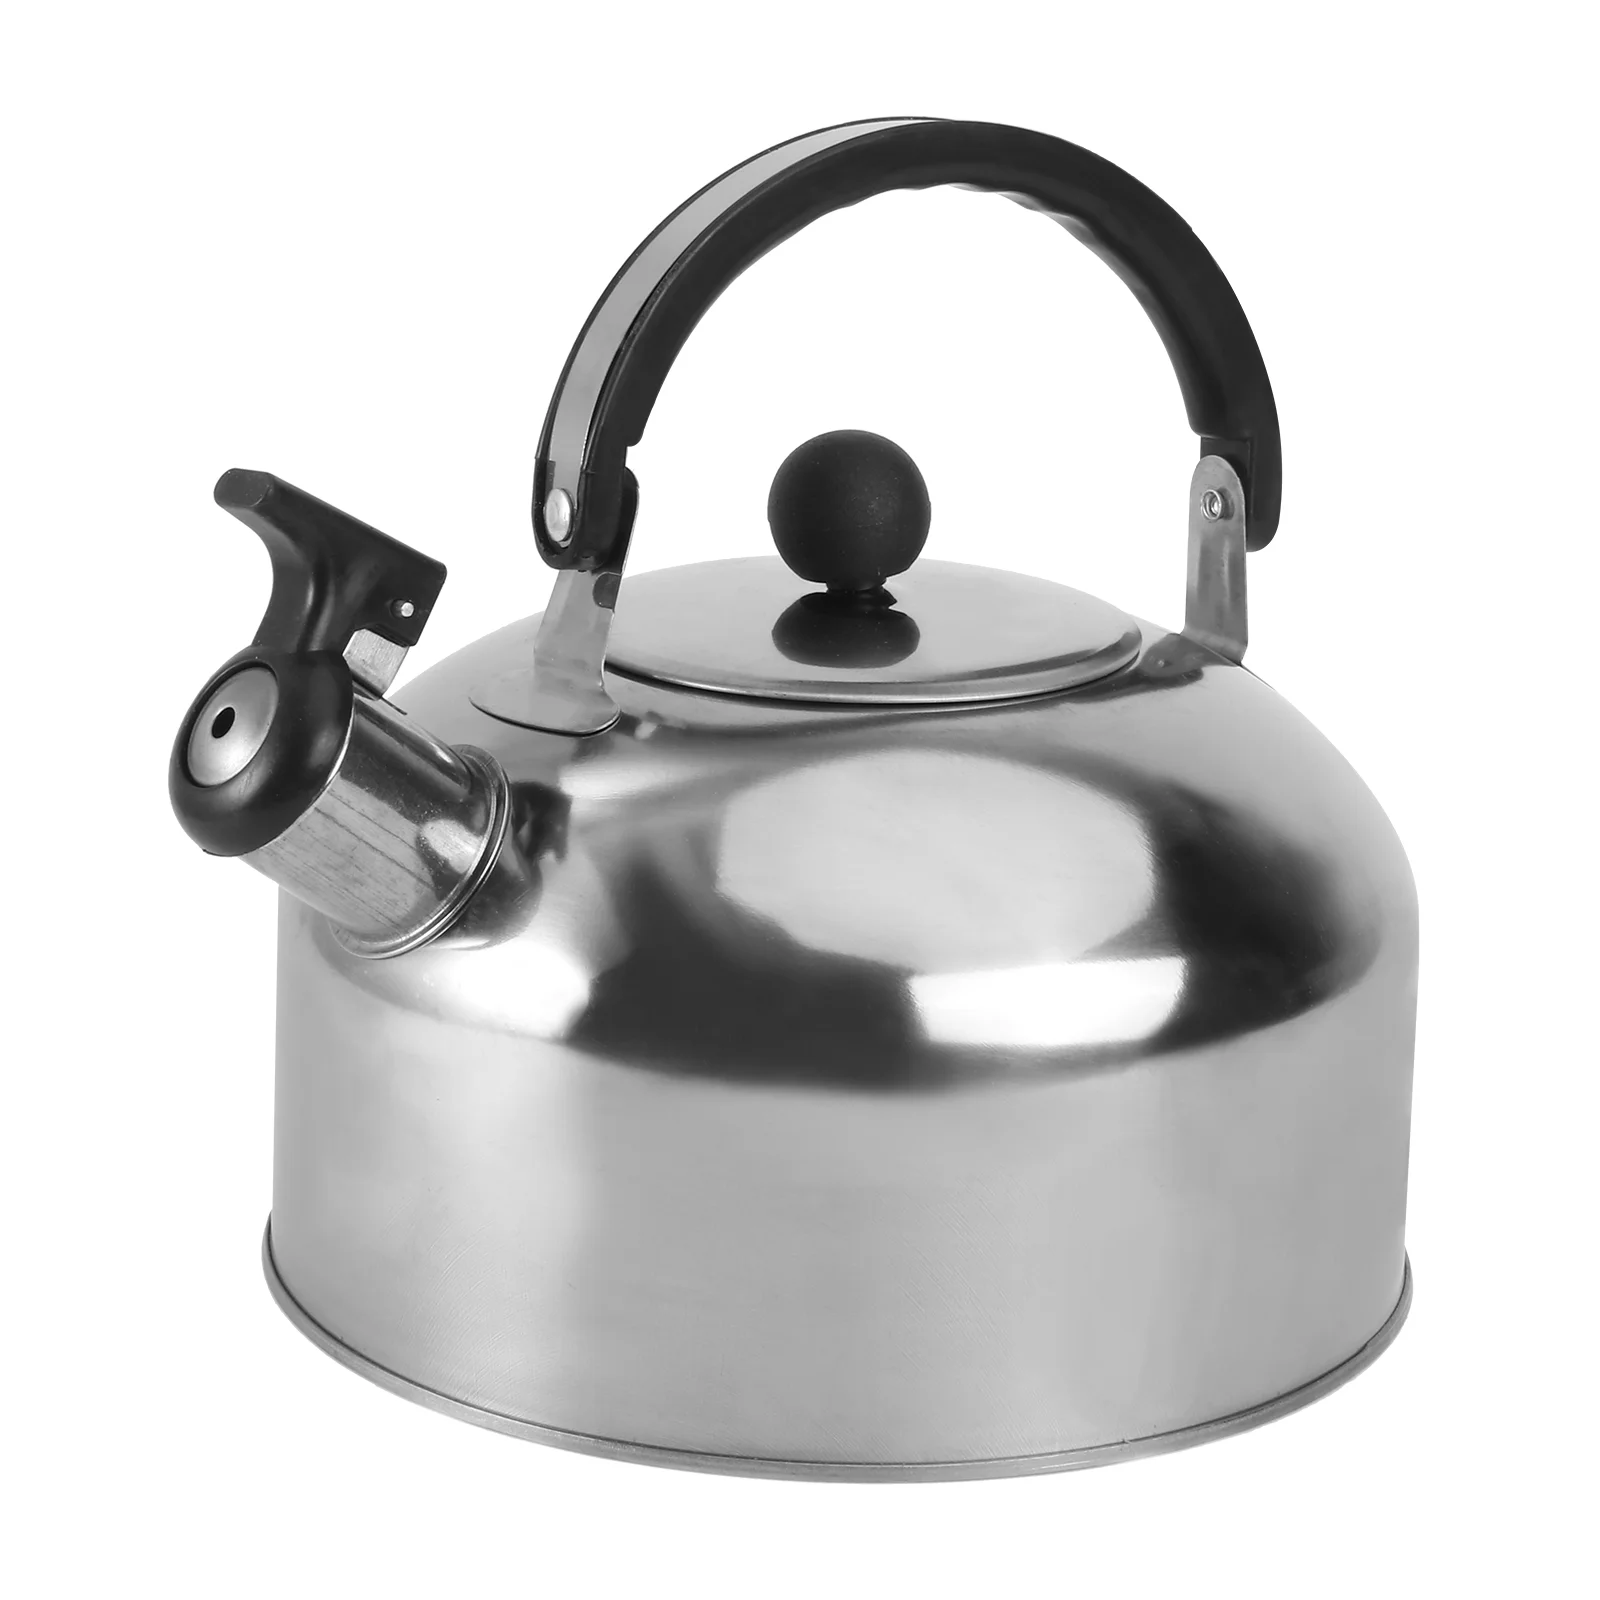 

Coffee Maker Espresso Stovetop Teakettle Whistling Cofee Machine Pot Vintage Teapot Small Furnace